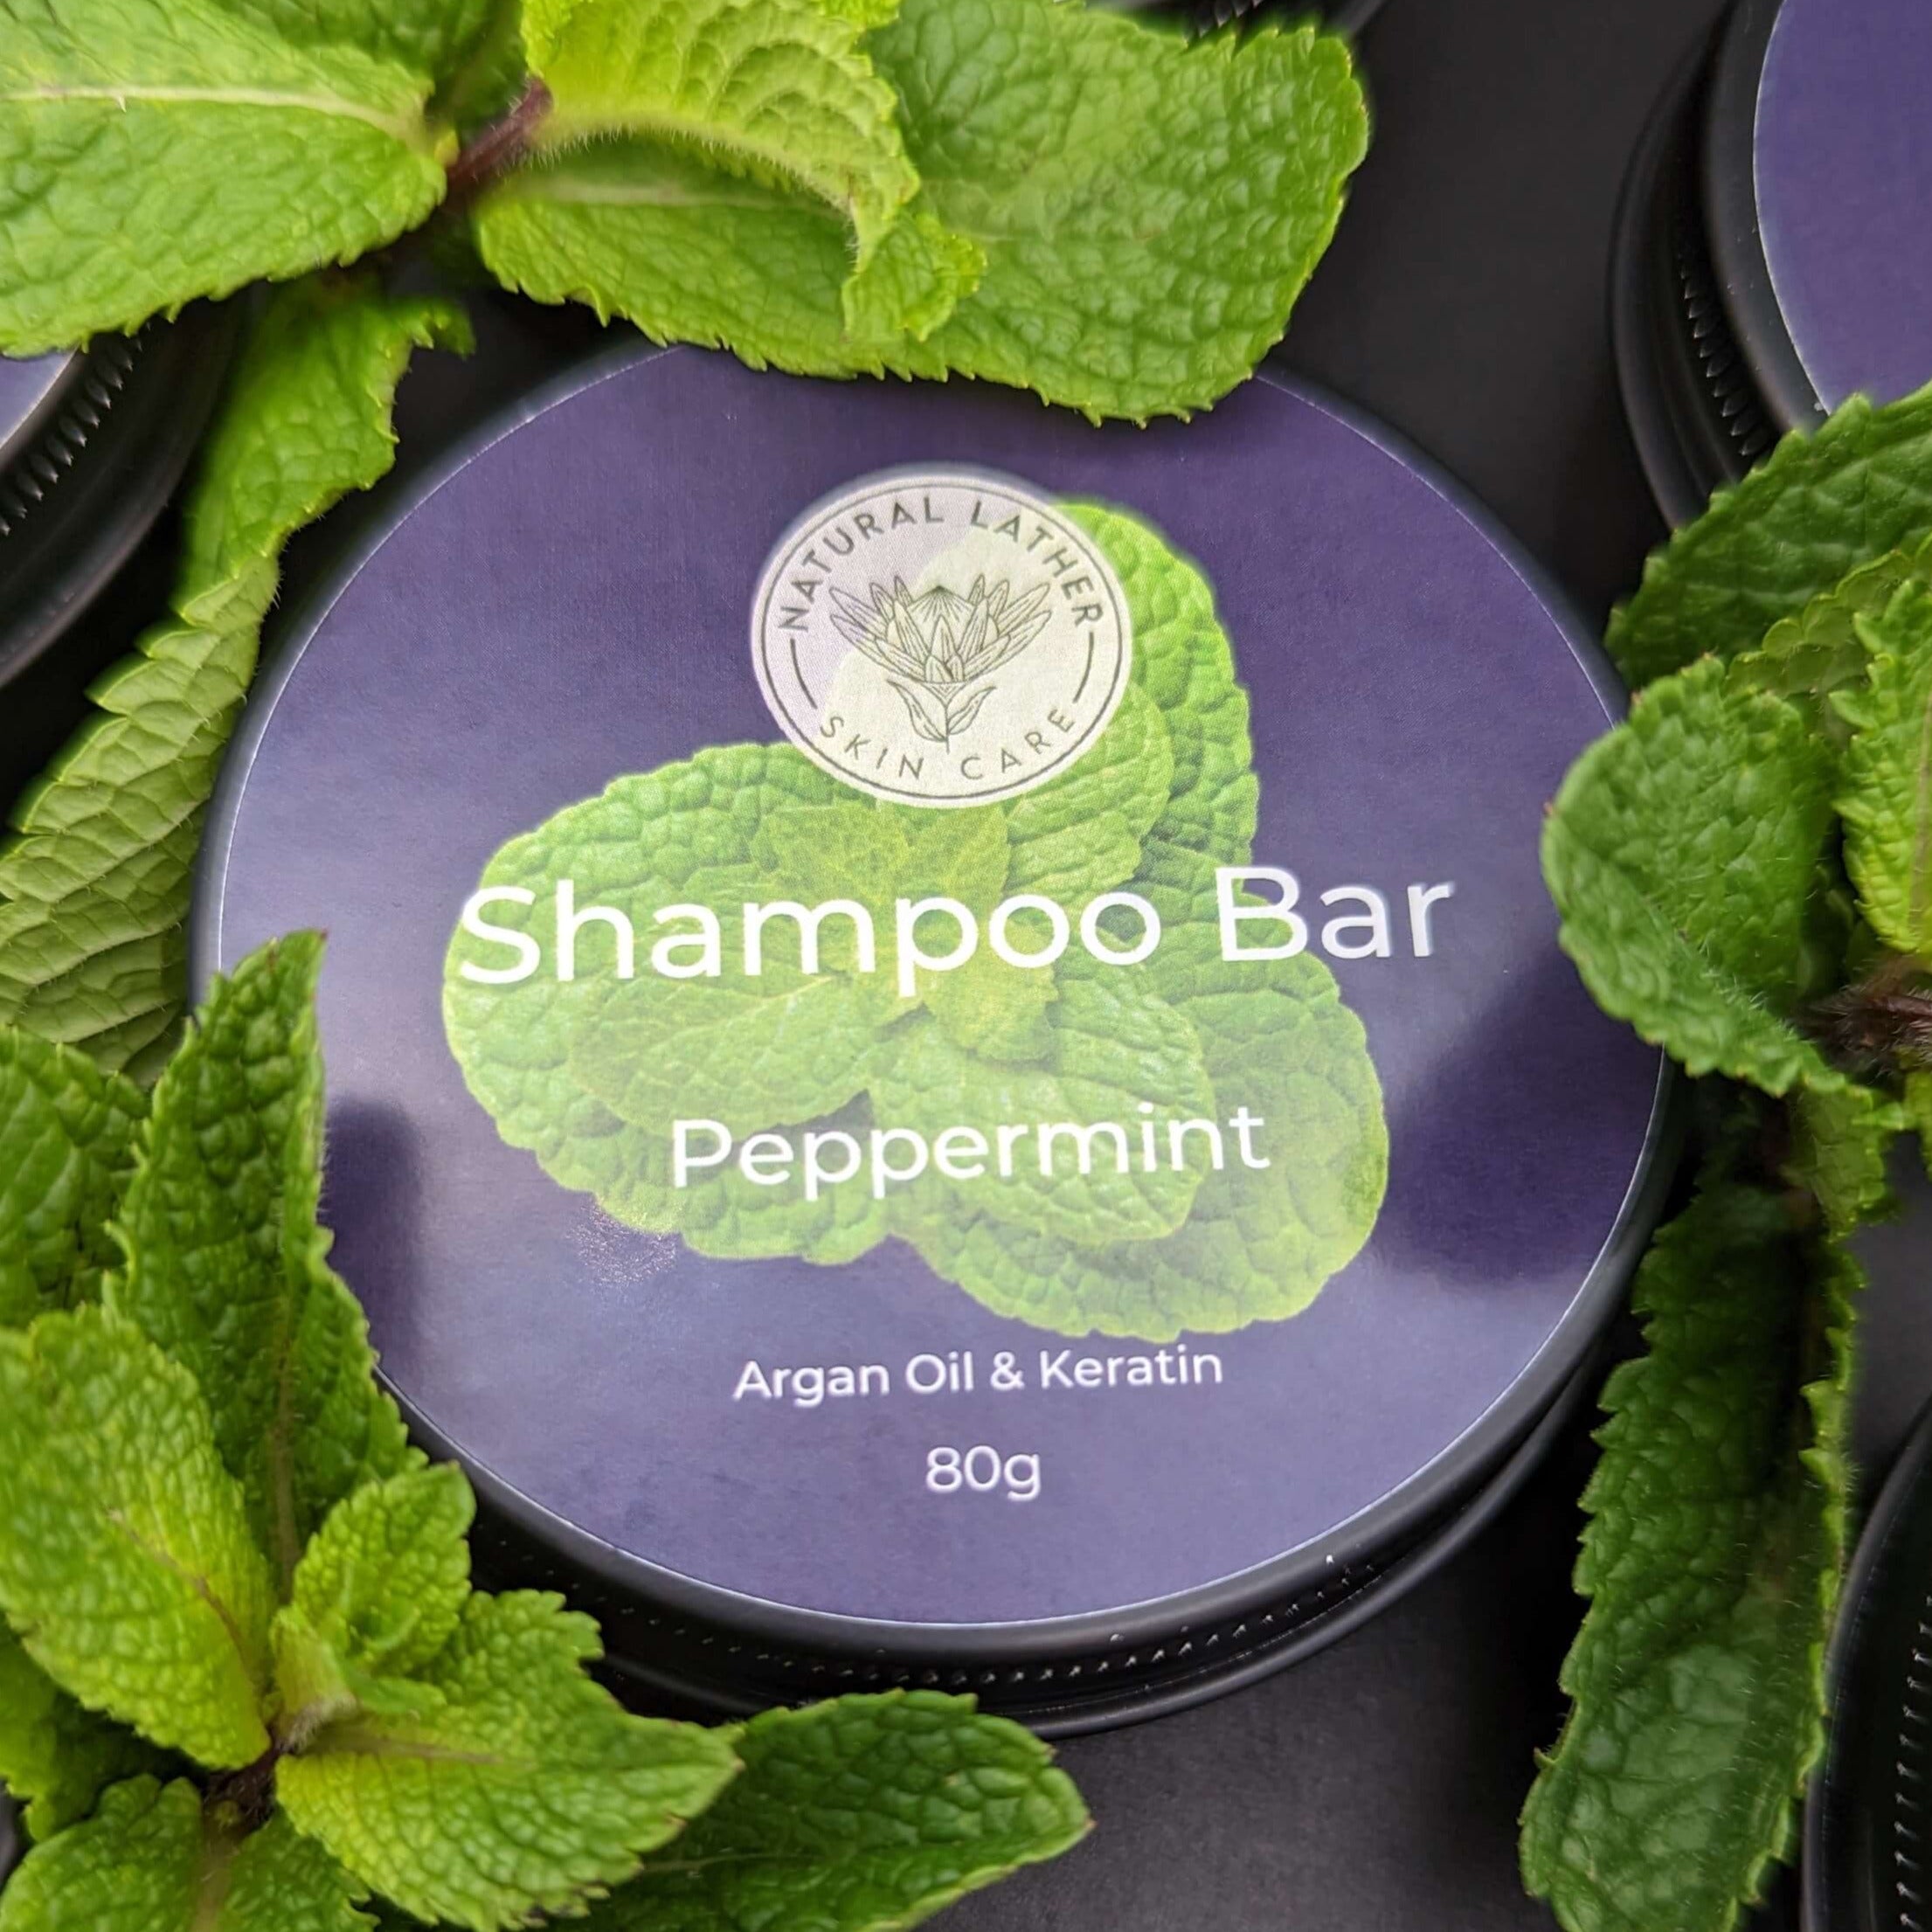 Shampoo Bar Peppermint – Natural Lather